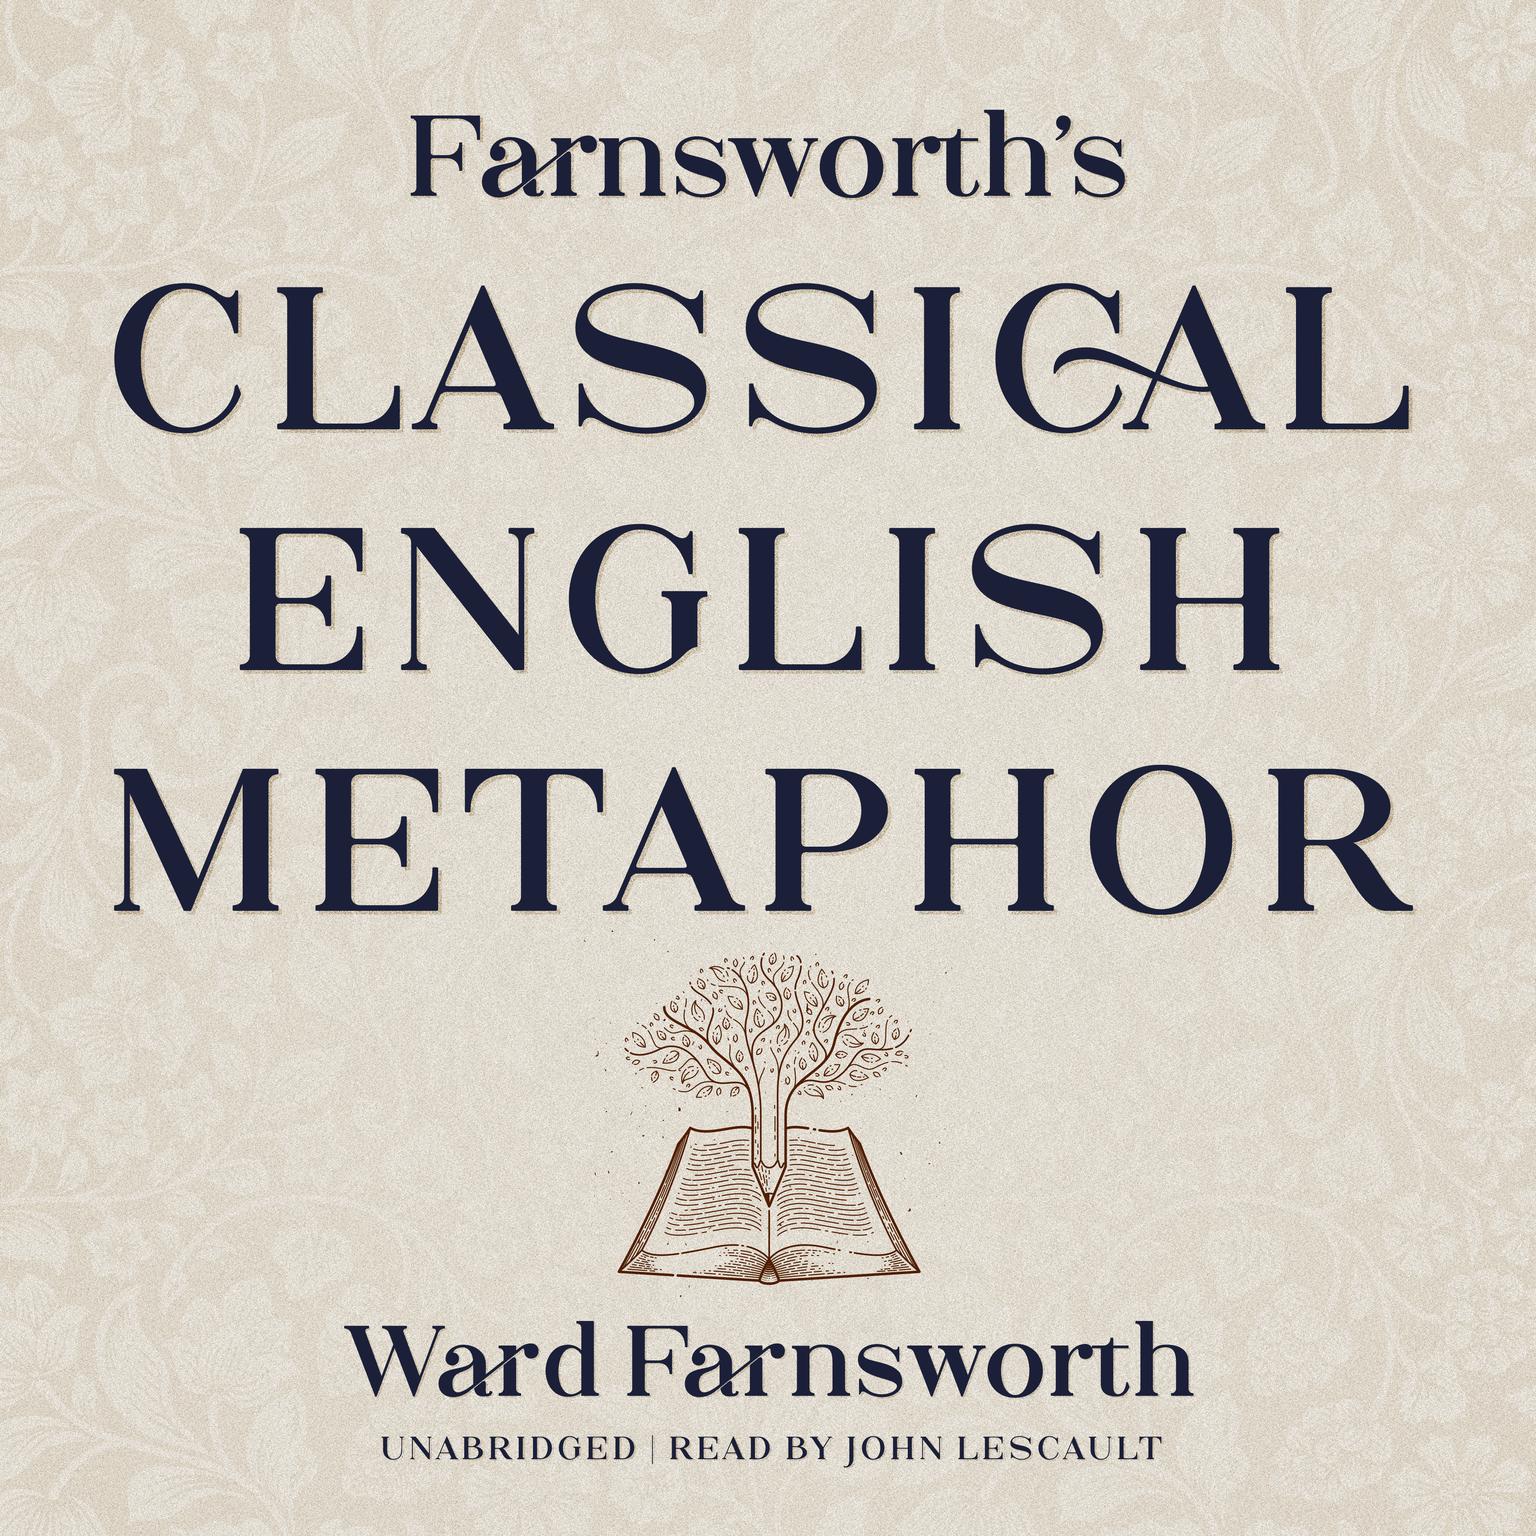 Farnsworth’s Classical English Metaphor Audiobook, by Ward Farnsworth